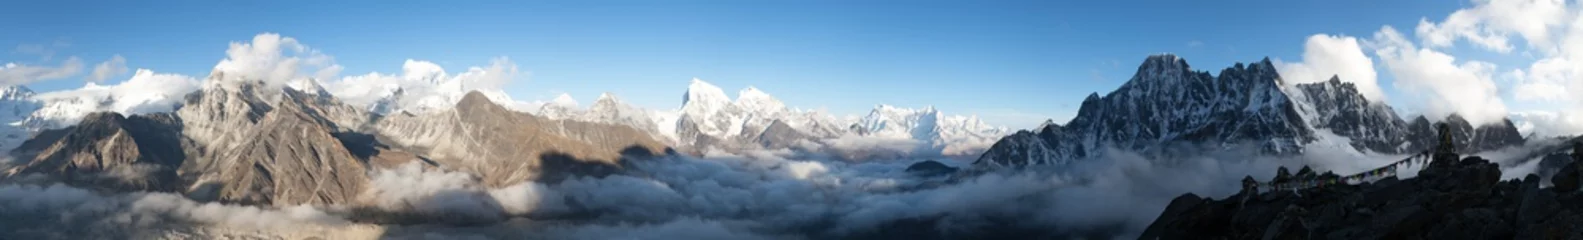 Peel and stick wall murals Panorama Photos panorama of Mount Everest, Lhotse, Makalu and Cho Oyu